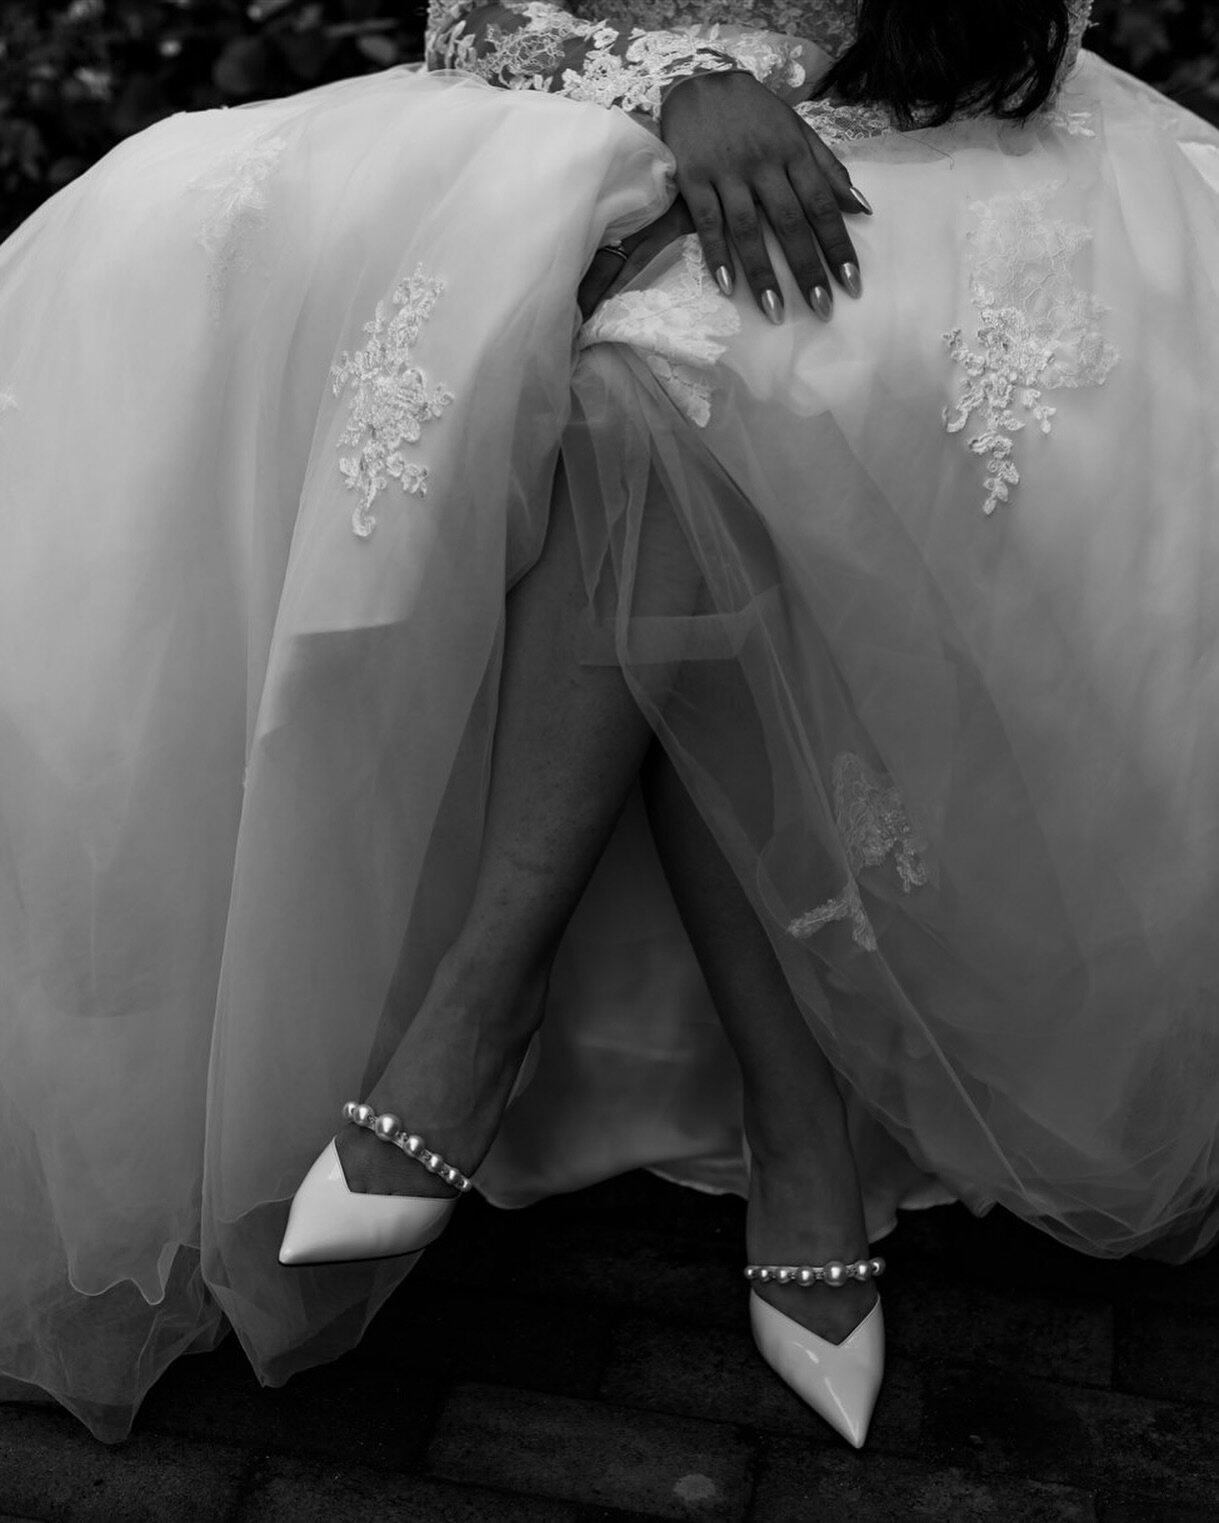 𝘐𝘵&rsquo;𝘴 𝘢𝘣𝘰𝘶𝘵 𝘵𝘩𝘦 𝘥𝘦𝘵𝘢𝘪𝘭𝘴 &bull; Classy and sassy 🖤
.
.
.
.
#jimmychoo #jimmychooshoes #jimmychooeyewear #weddingshoes #blackandwhitephotography #weddingdress #weddingphotography #blackandwhite #blackandwhitewedding #pronoviasbr